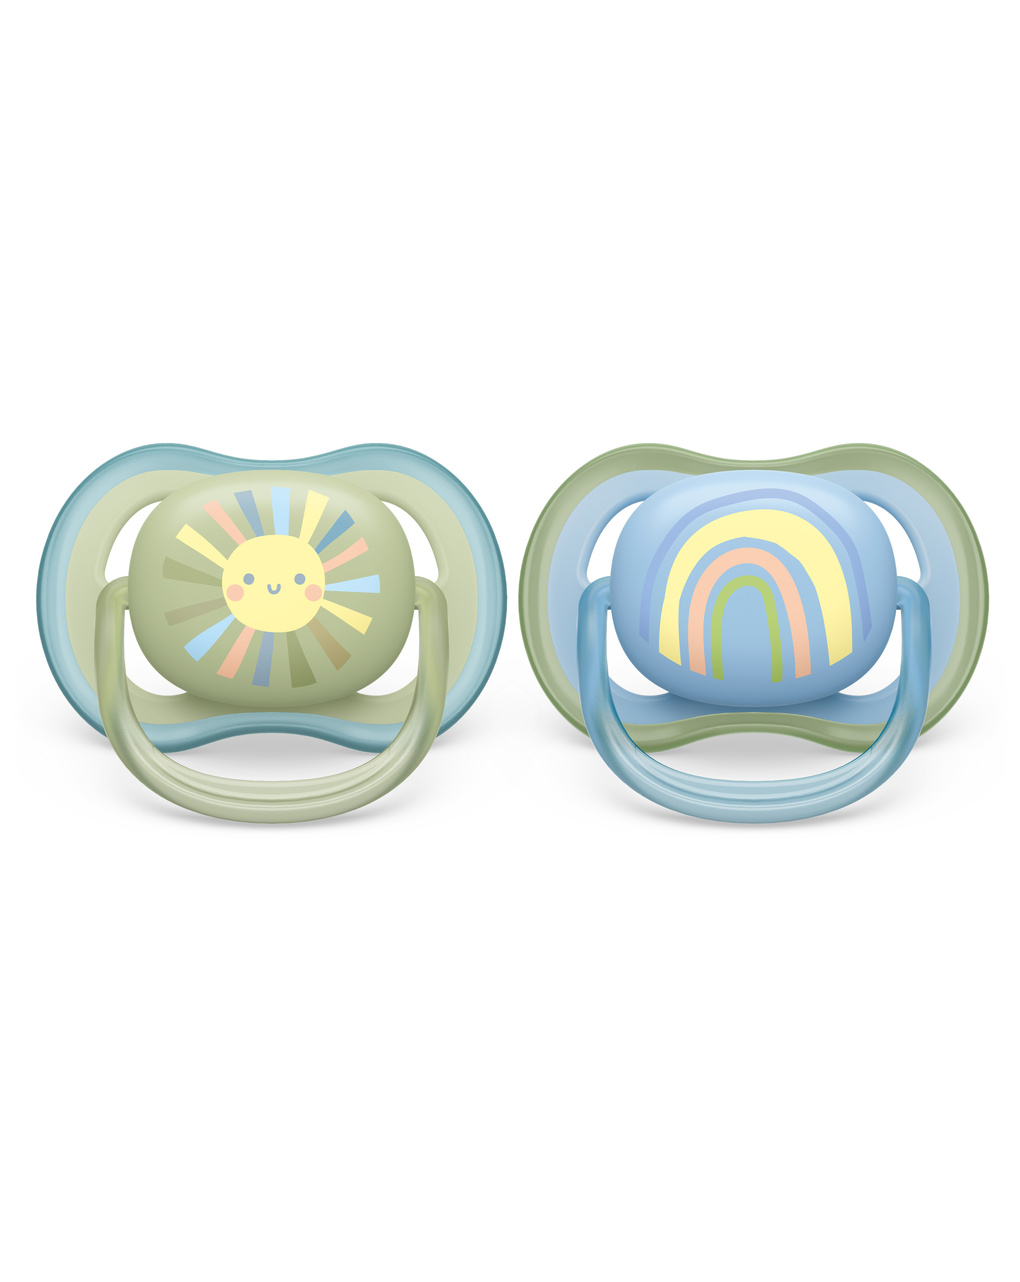 2 chupetas ultra air 0-6 meses com tetina ortodôntica simétrica - sol/arco-íris - philips avent - Philips Avent